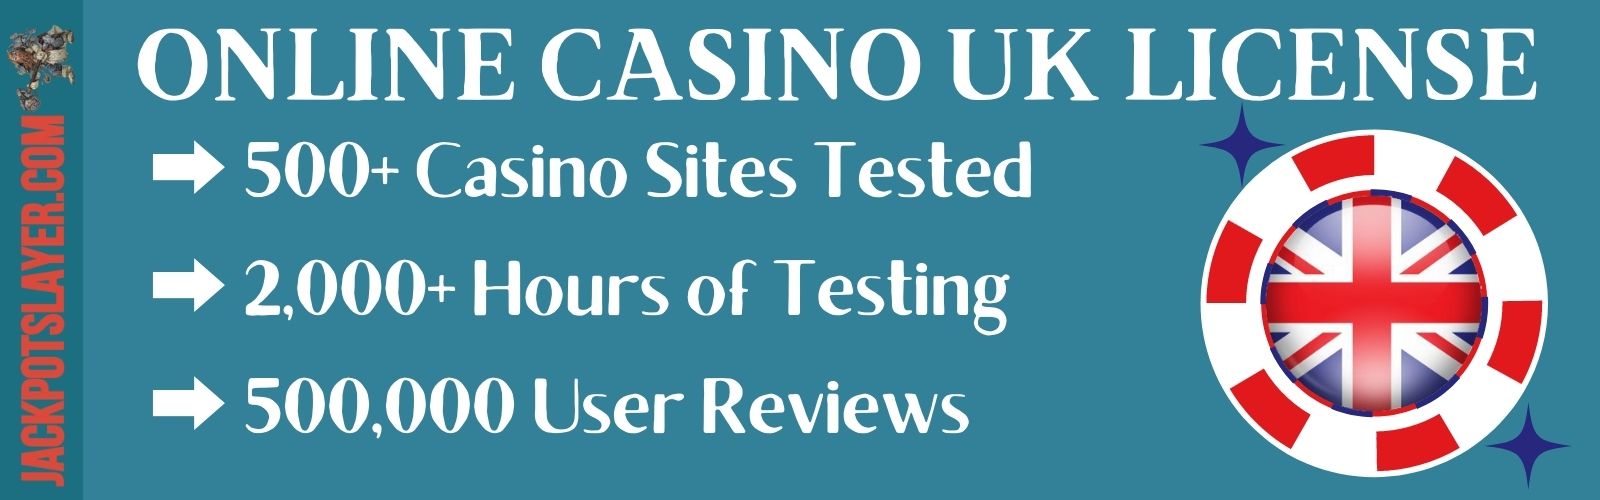 Online Casino UK License